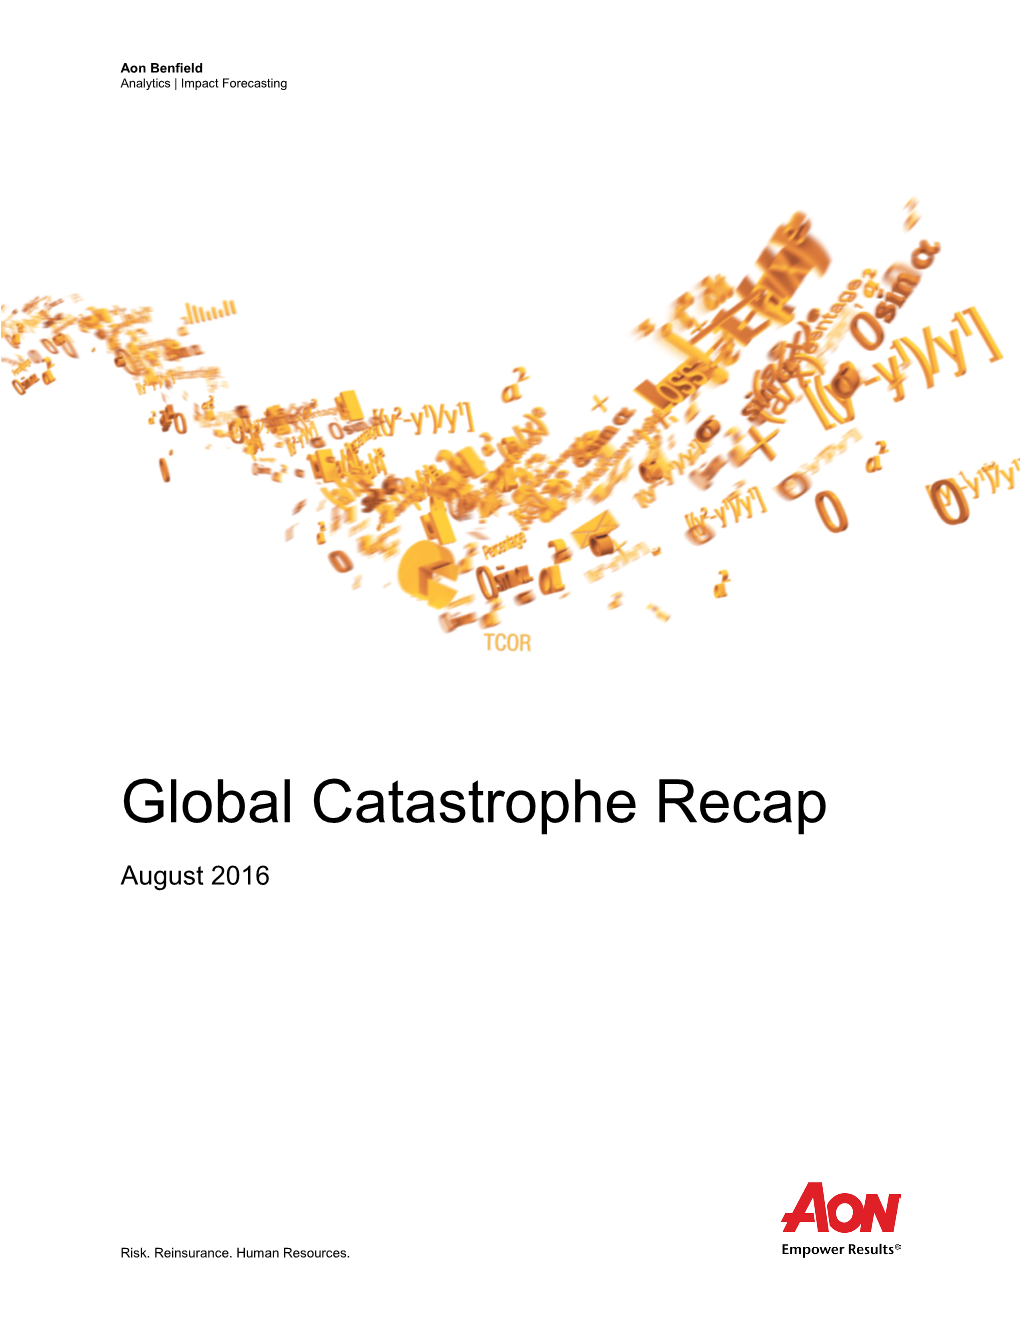 Global Catastrophe Recap August 2016